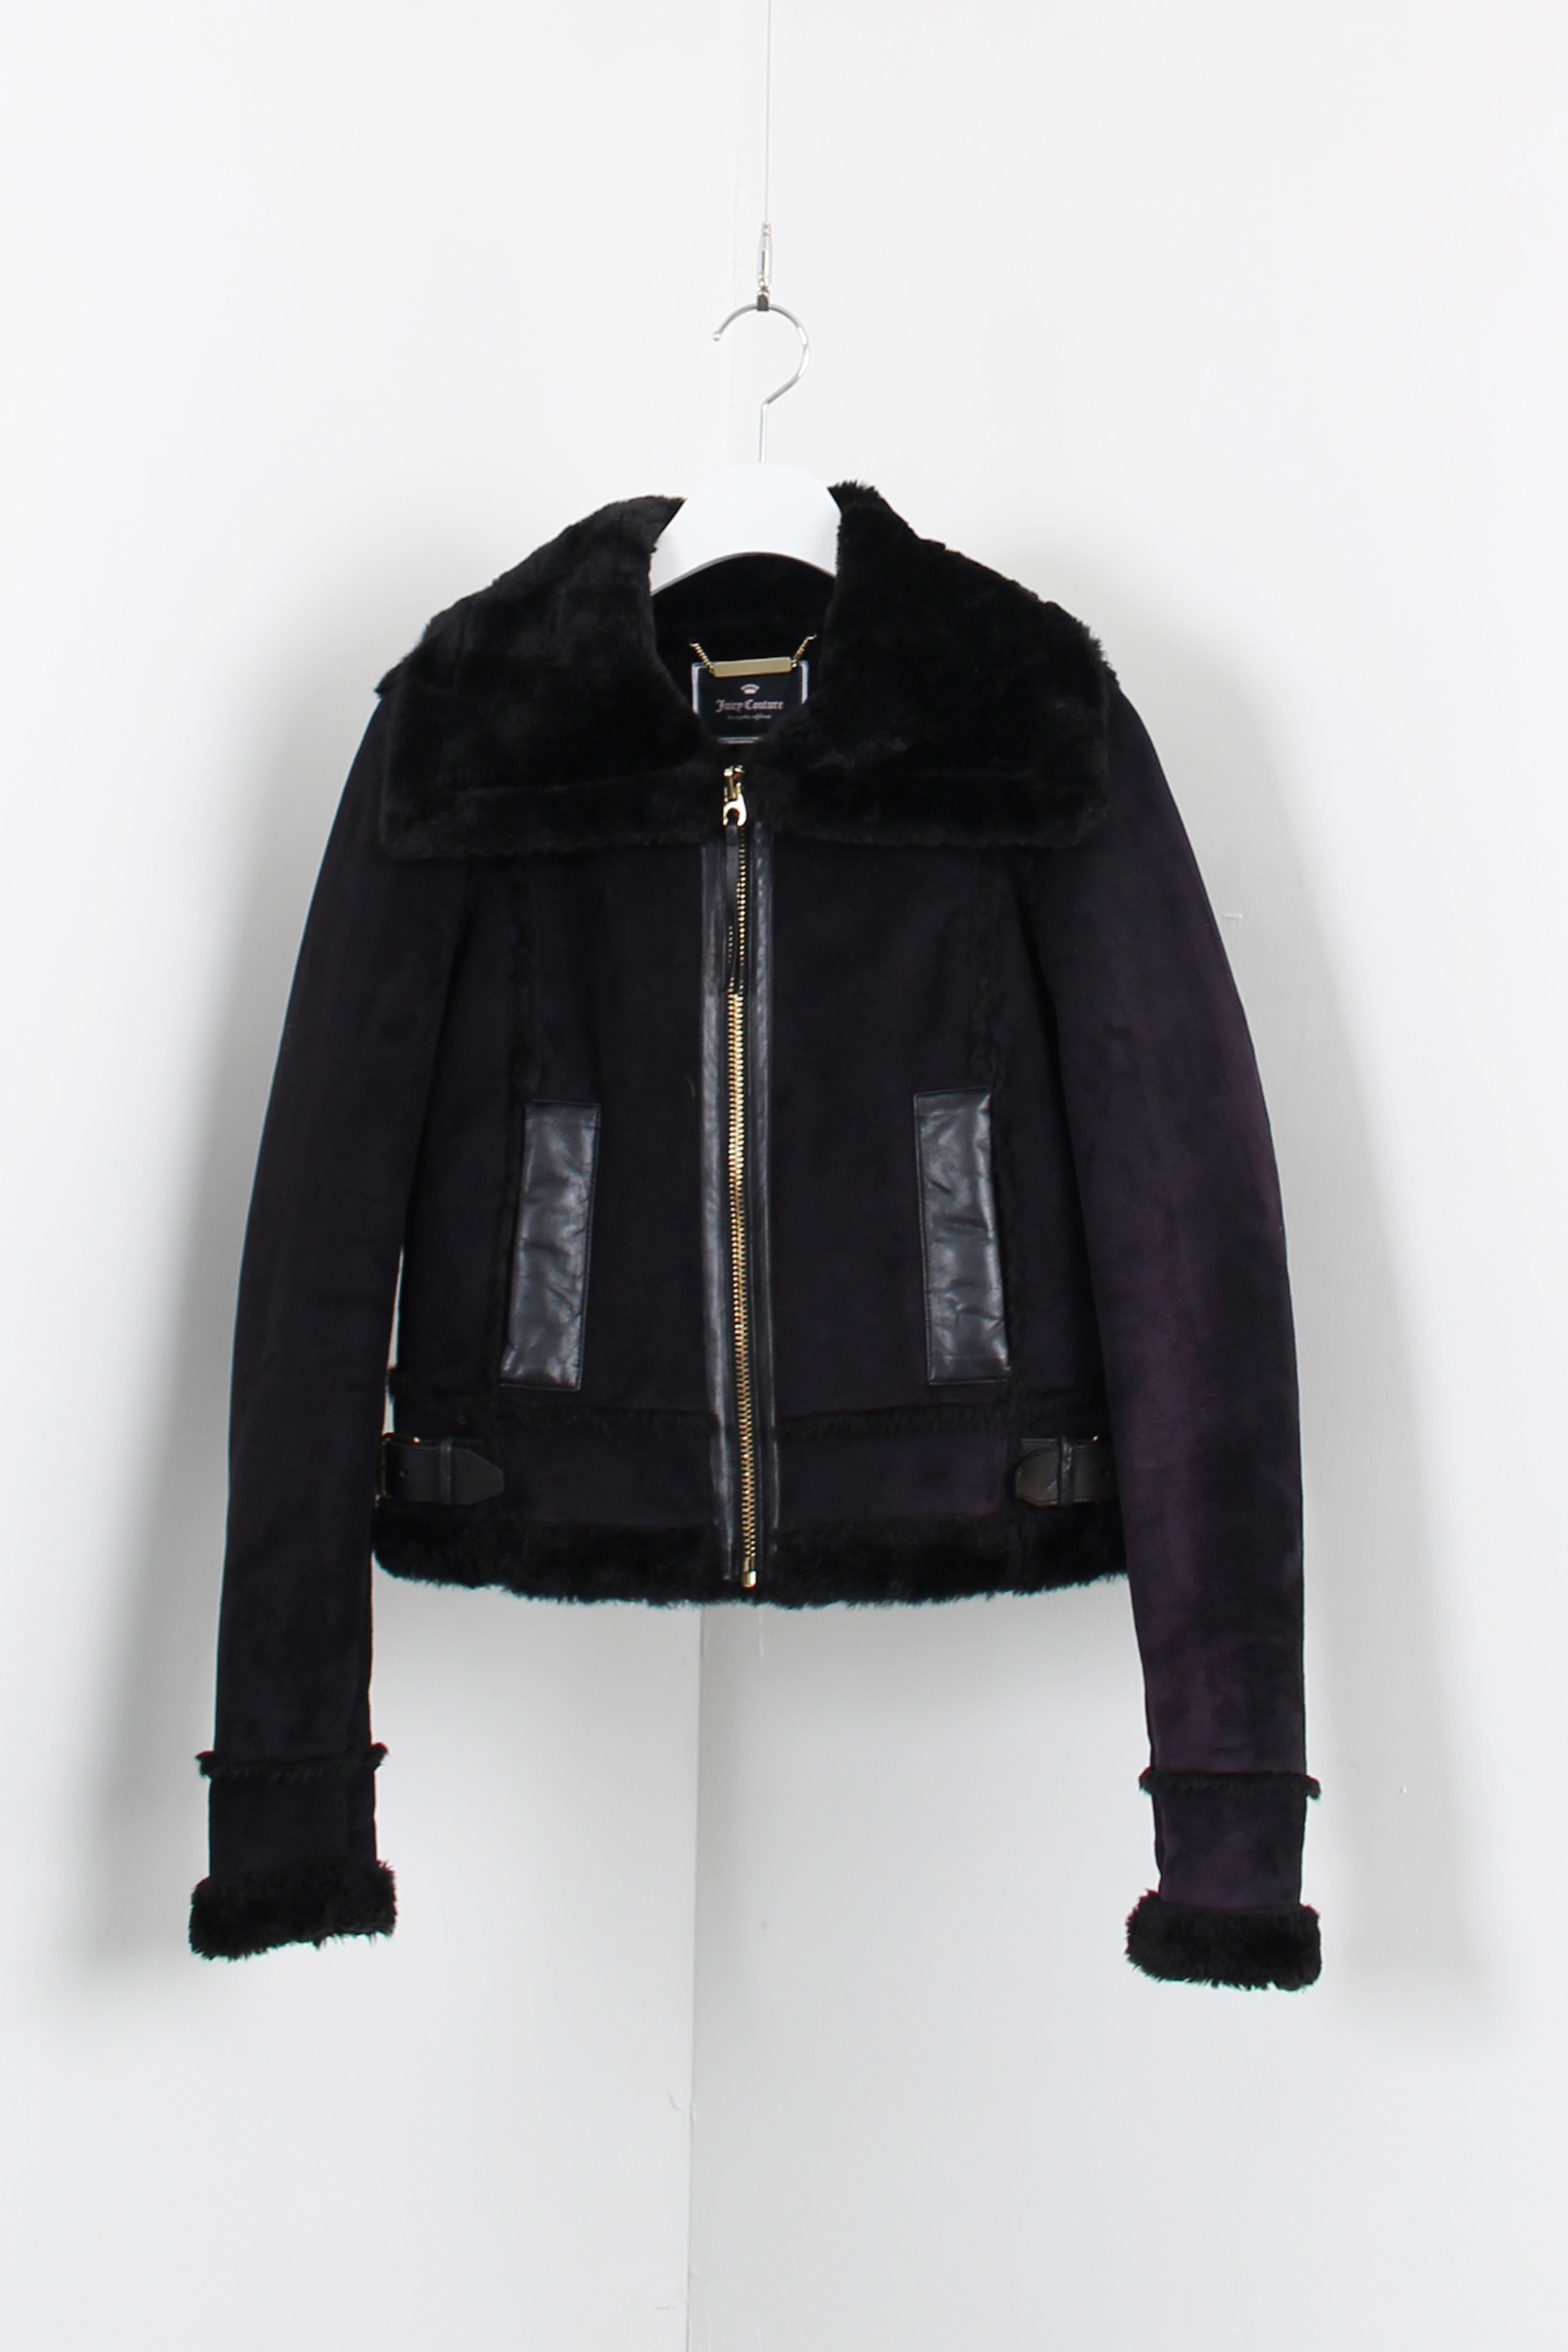 Juicy Couture fake suede jacket